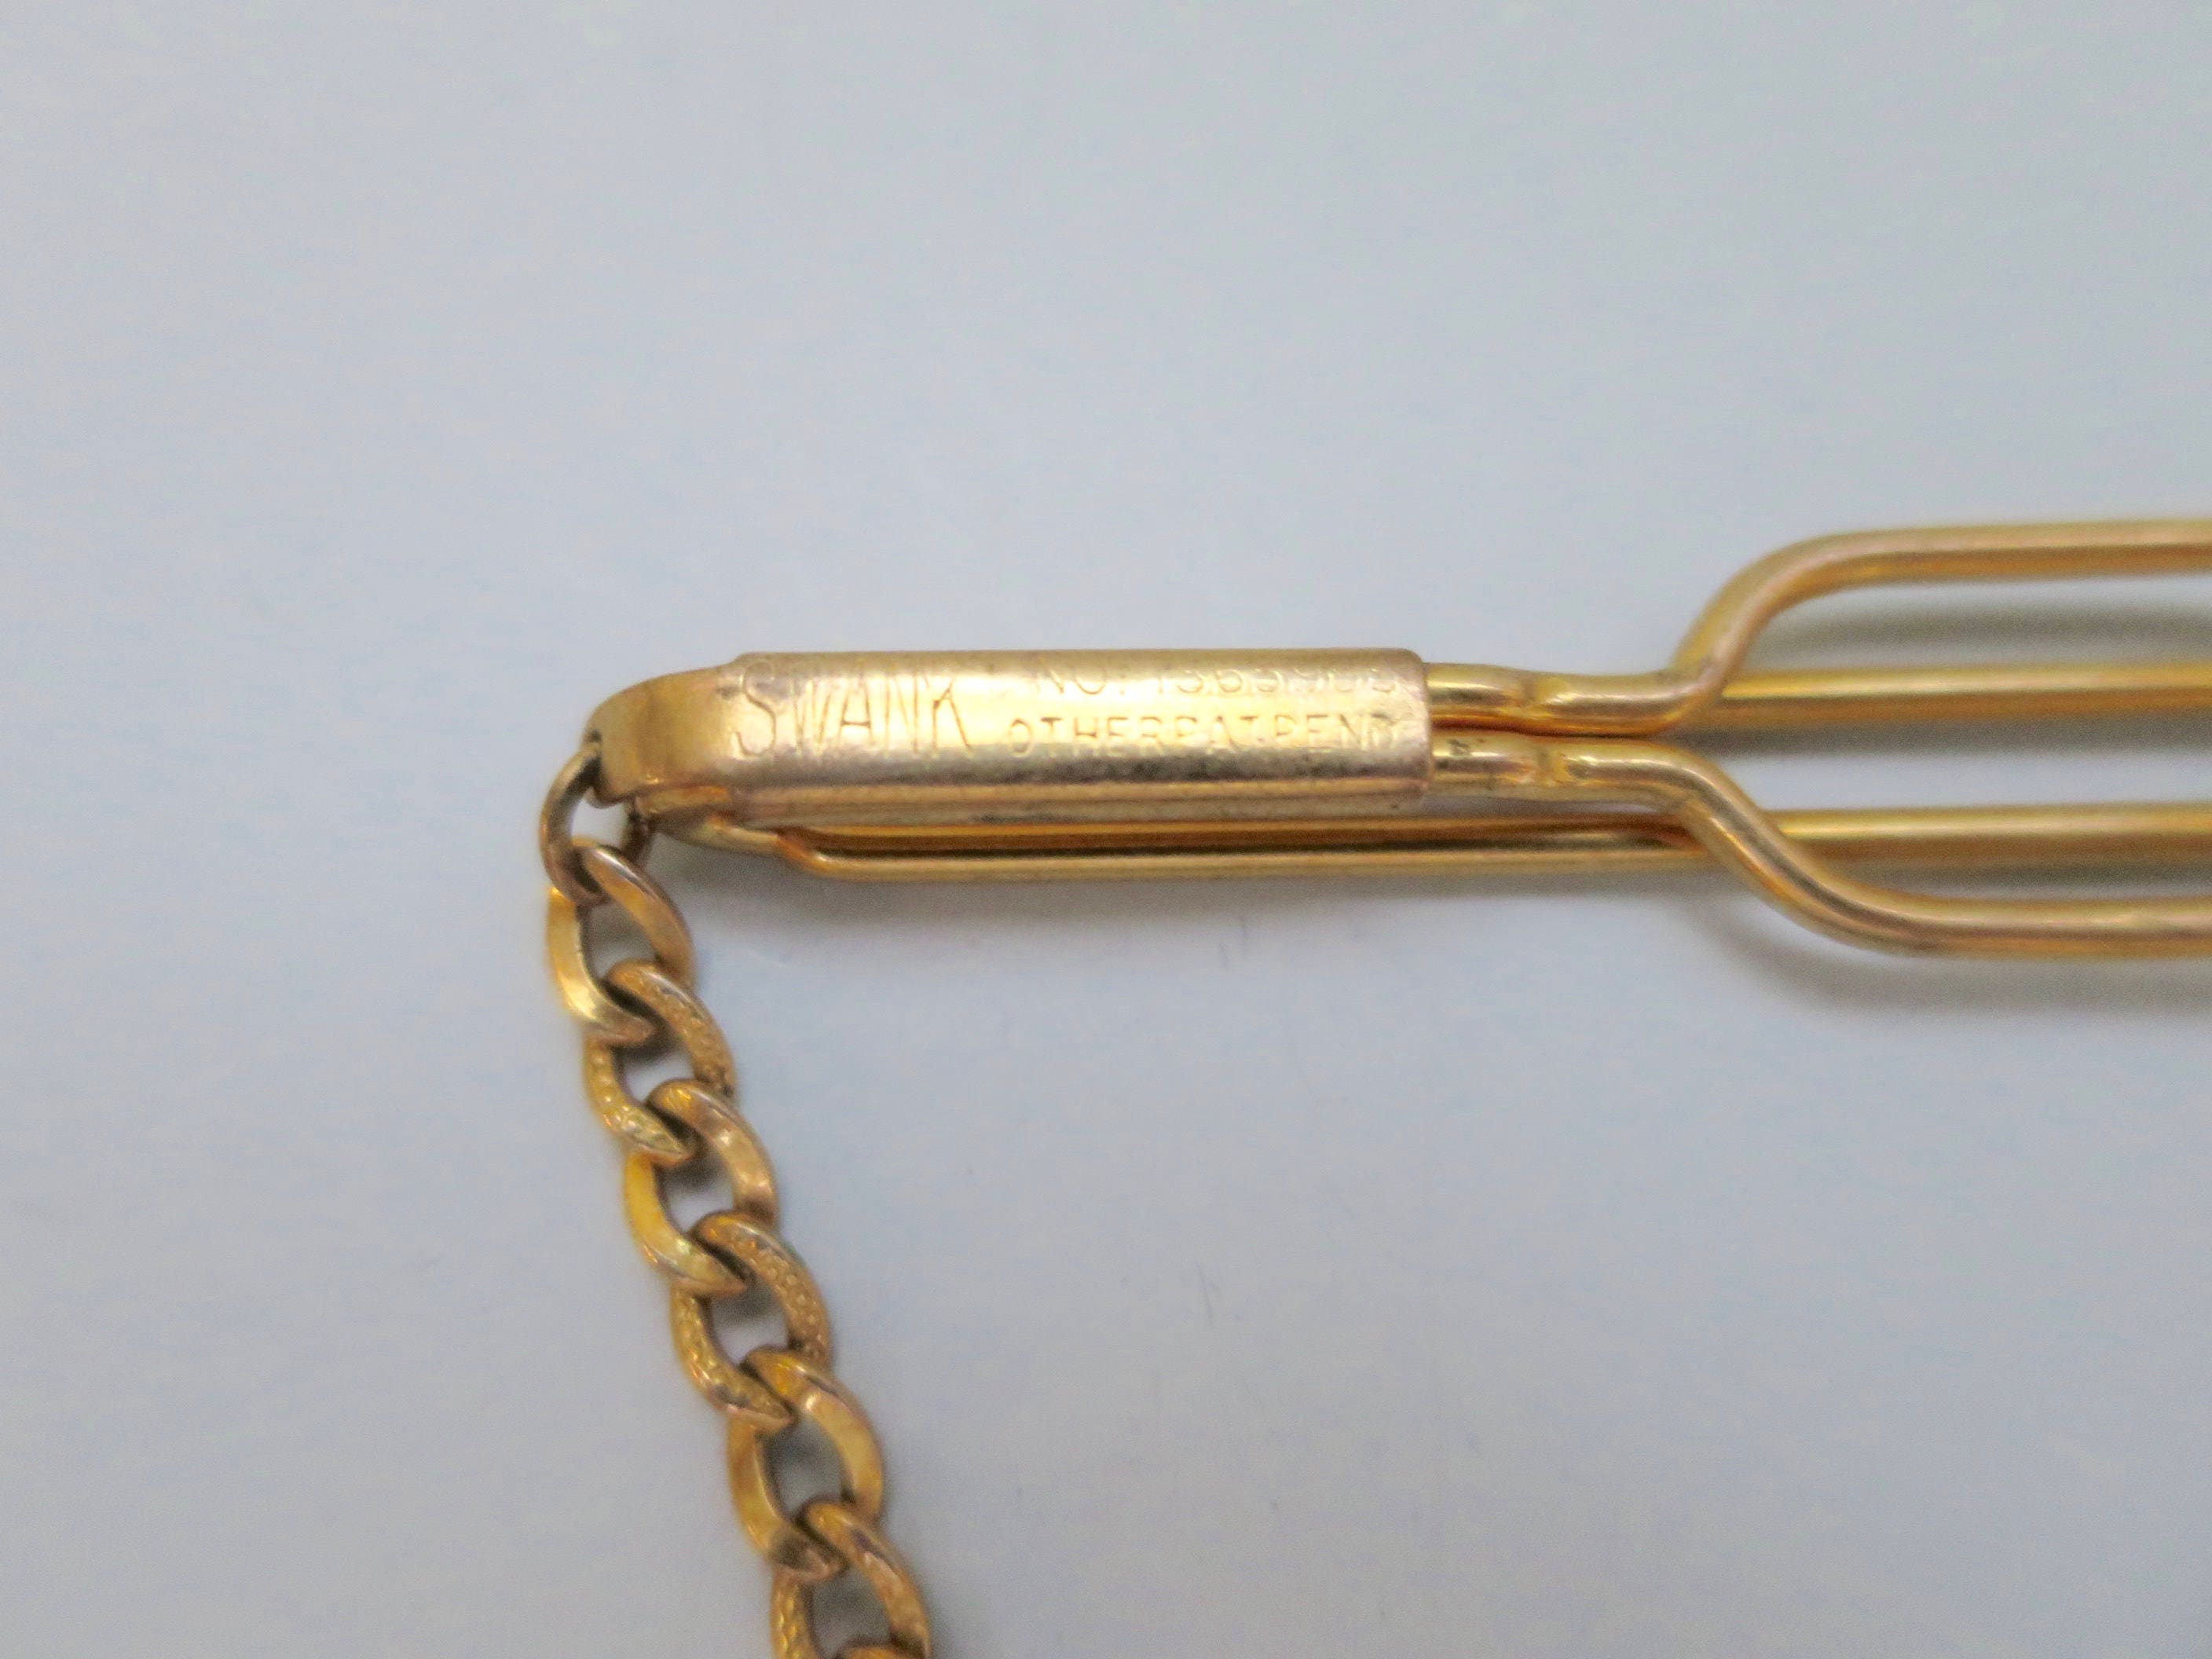 Swank Tie Clip Gold Finish Hanging Chain Vintage Art Deco Tie